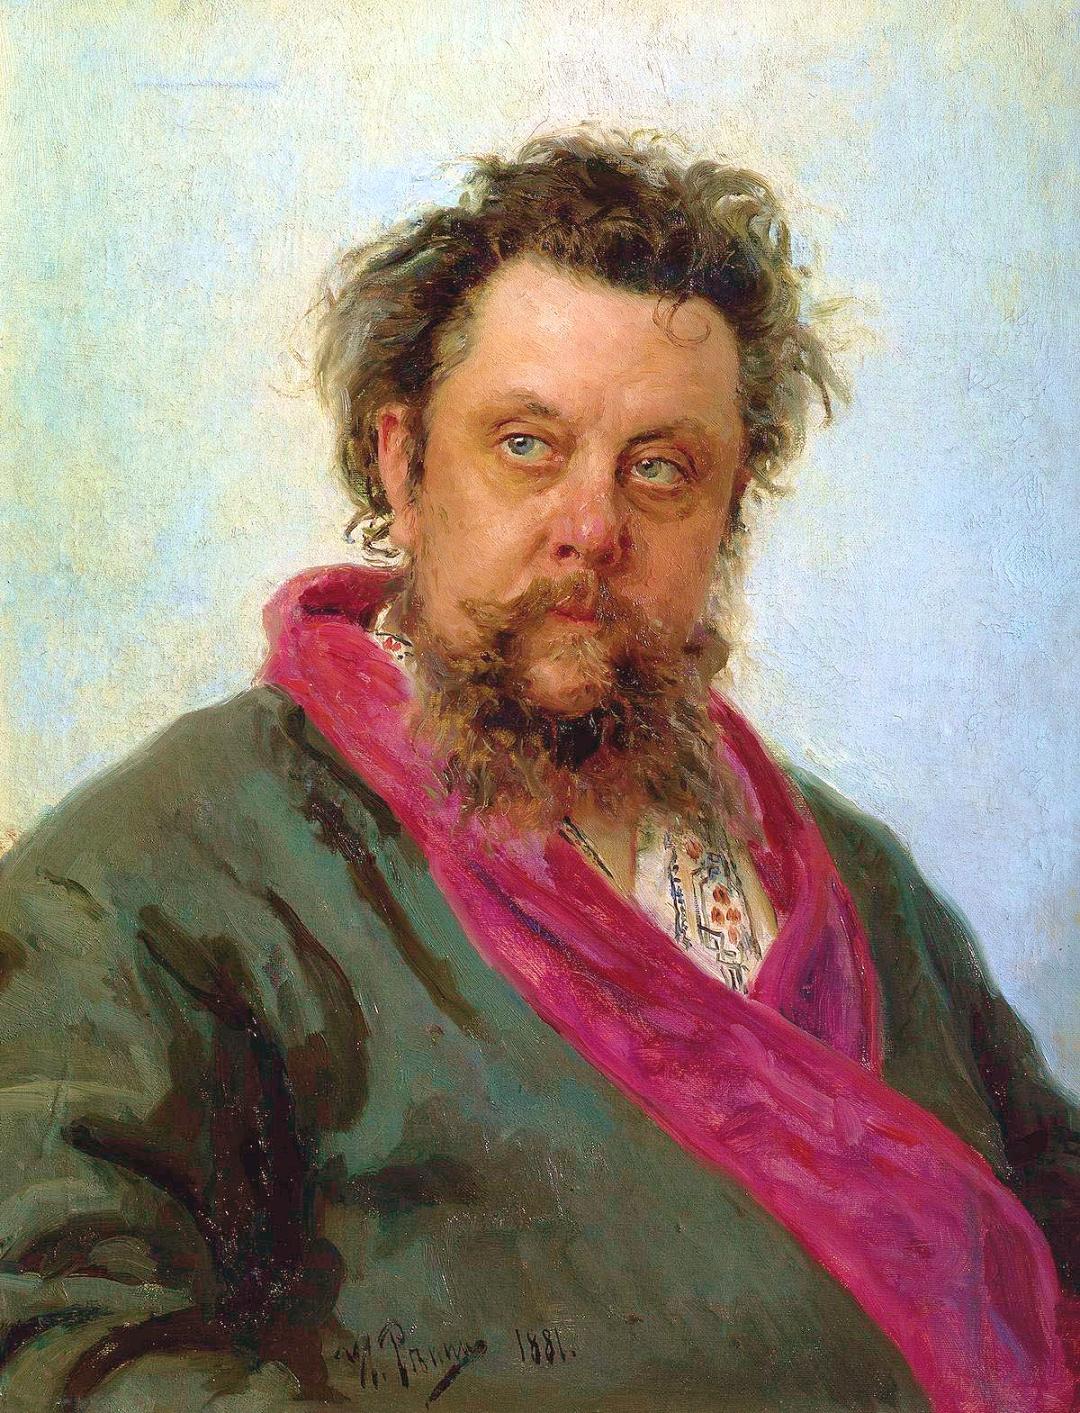 http://01varvara.files.wordpress.com/2008/02/ilya-repin-portrait-of-the-composer-modest-mussorgsky-1881.jpg